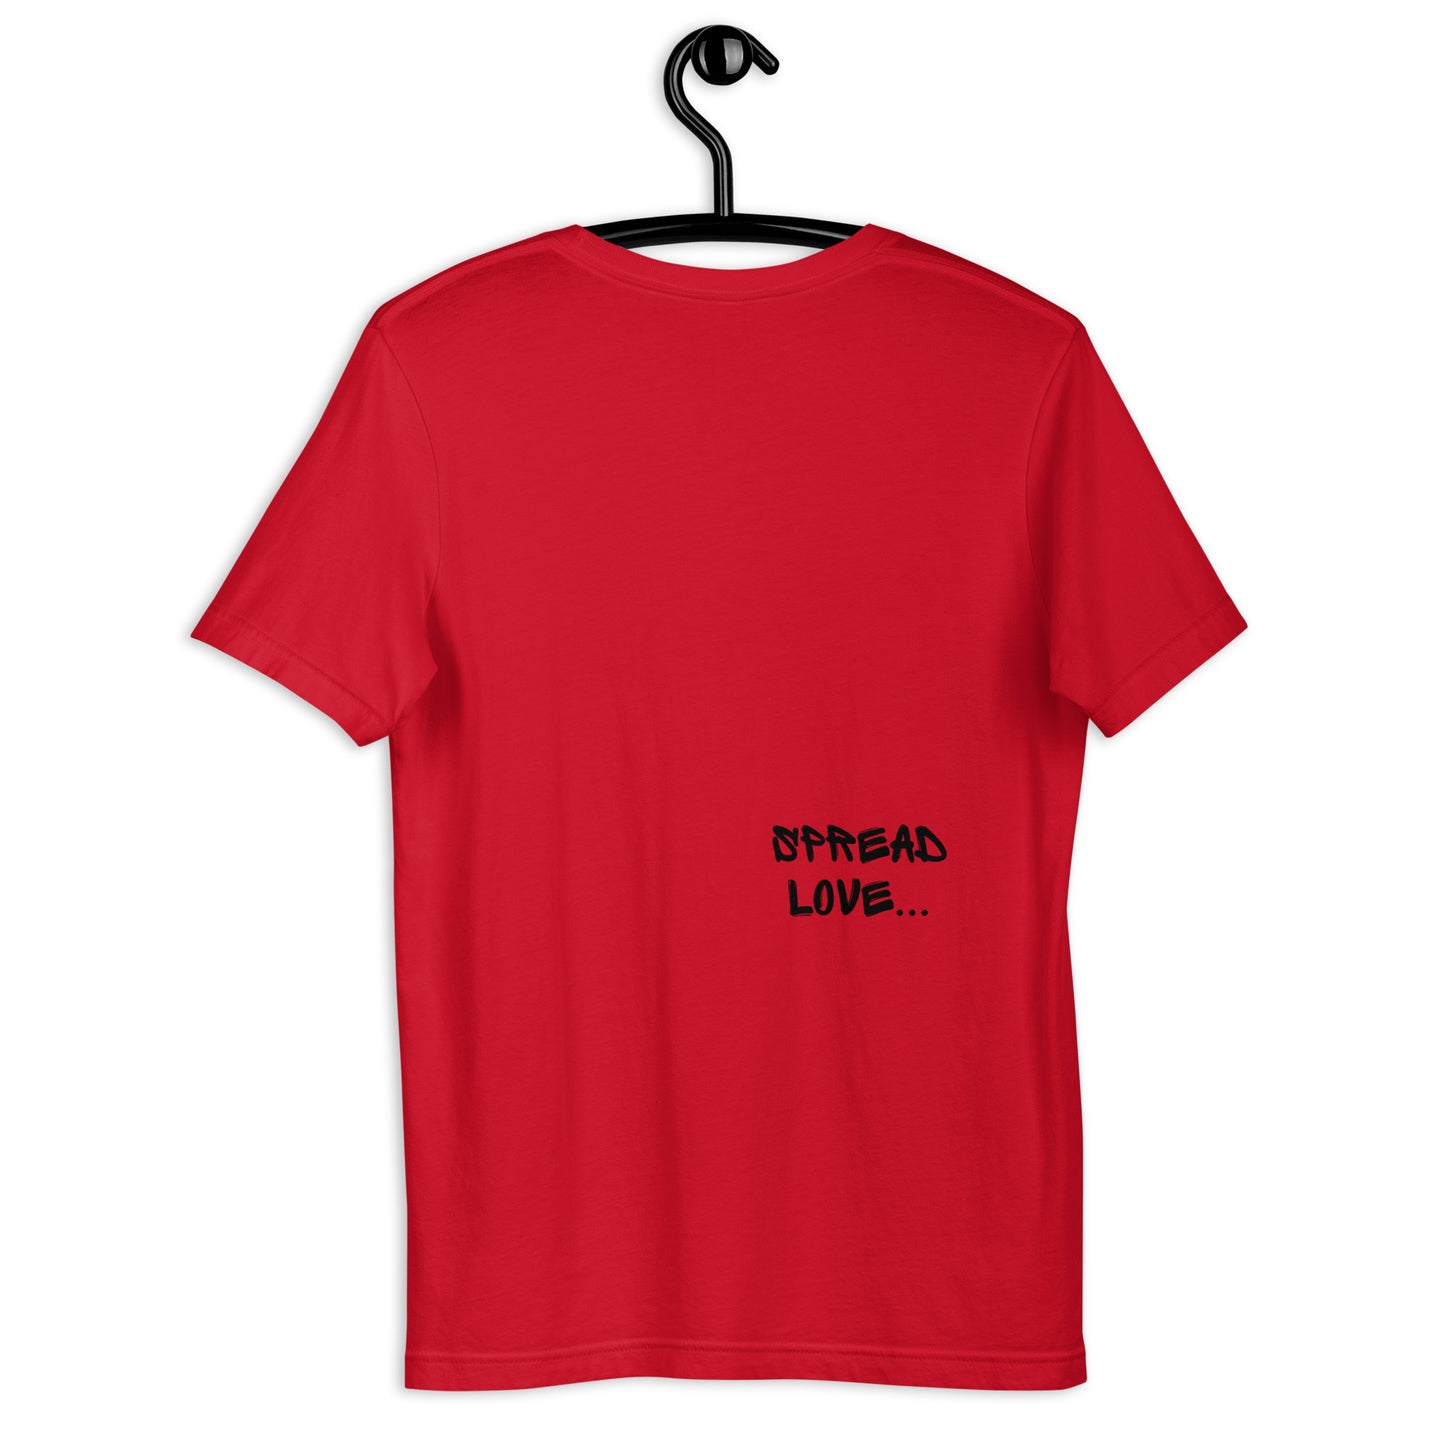 Spread Love Shirt